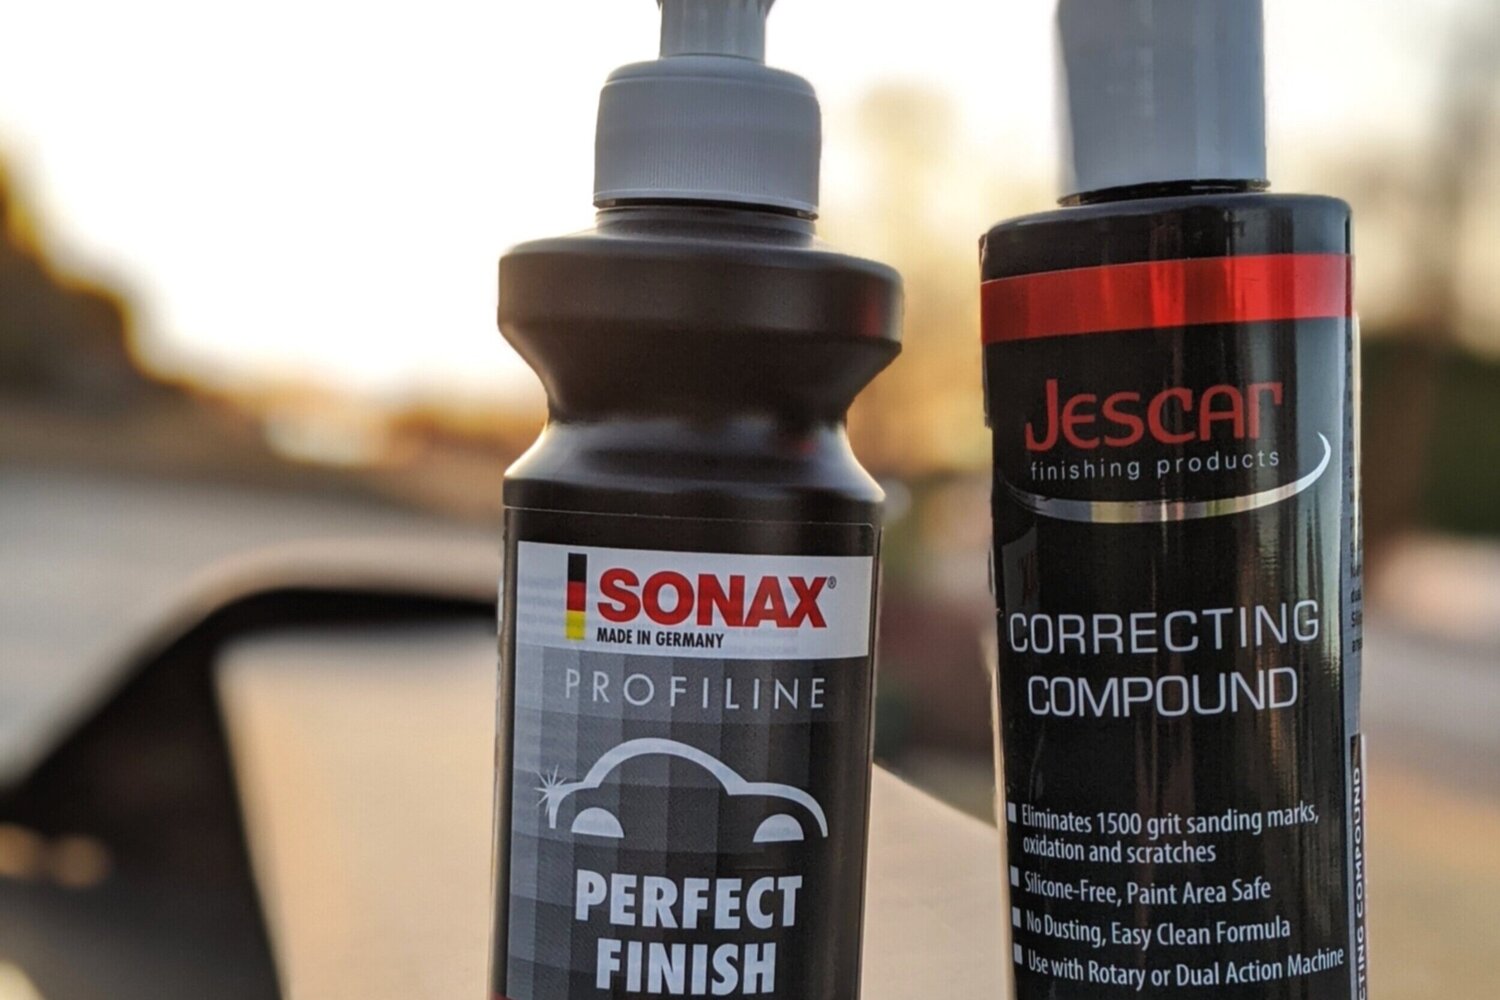 Sonax Perfect Finish Polish and Jescar Correcting Compound